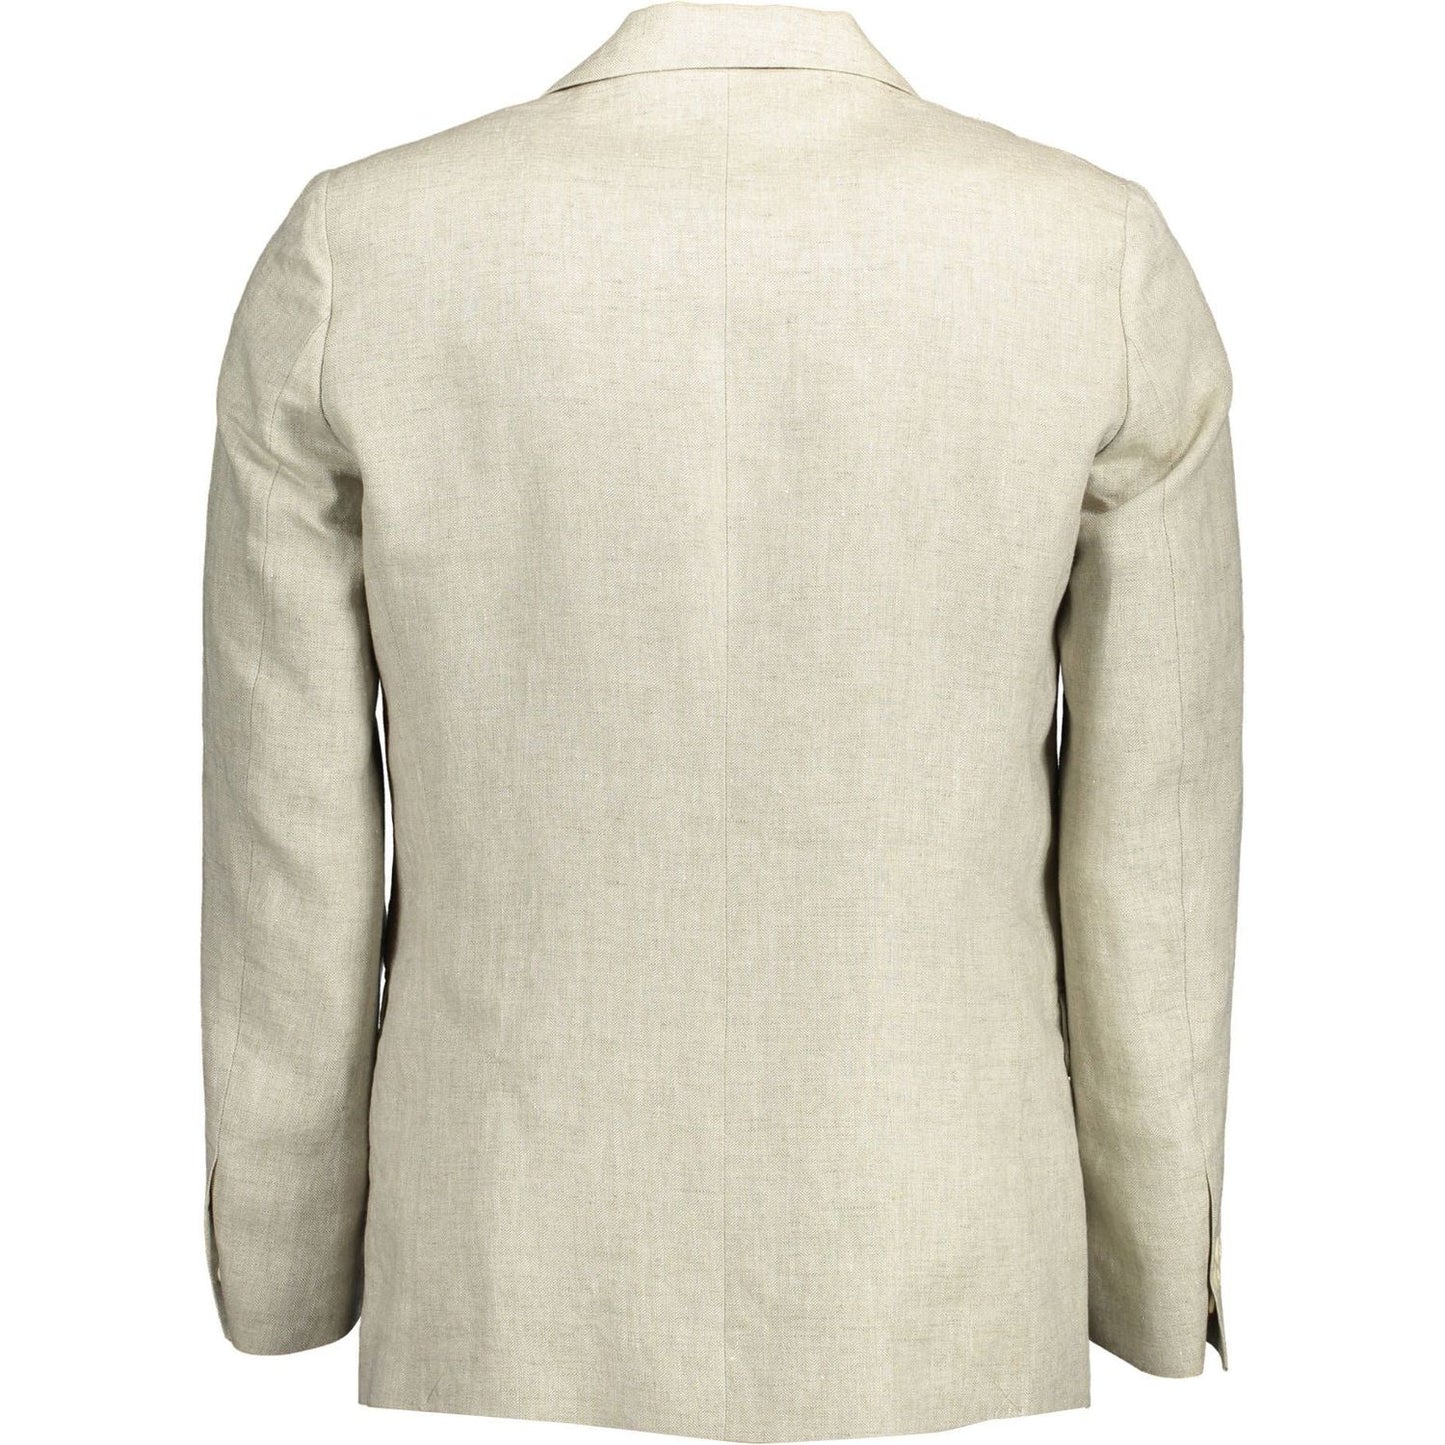 Gant Beige Linen Classic Jacket with Logo beige-linen-classic-jacket-with-logo